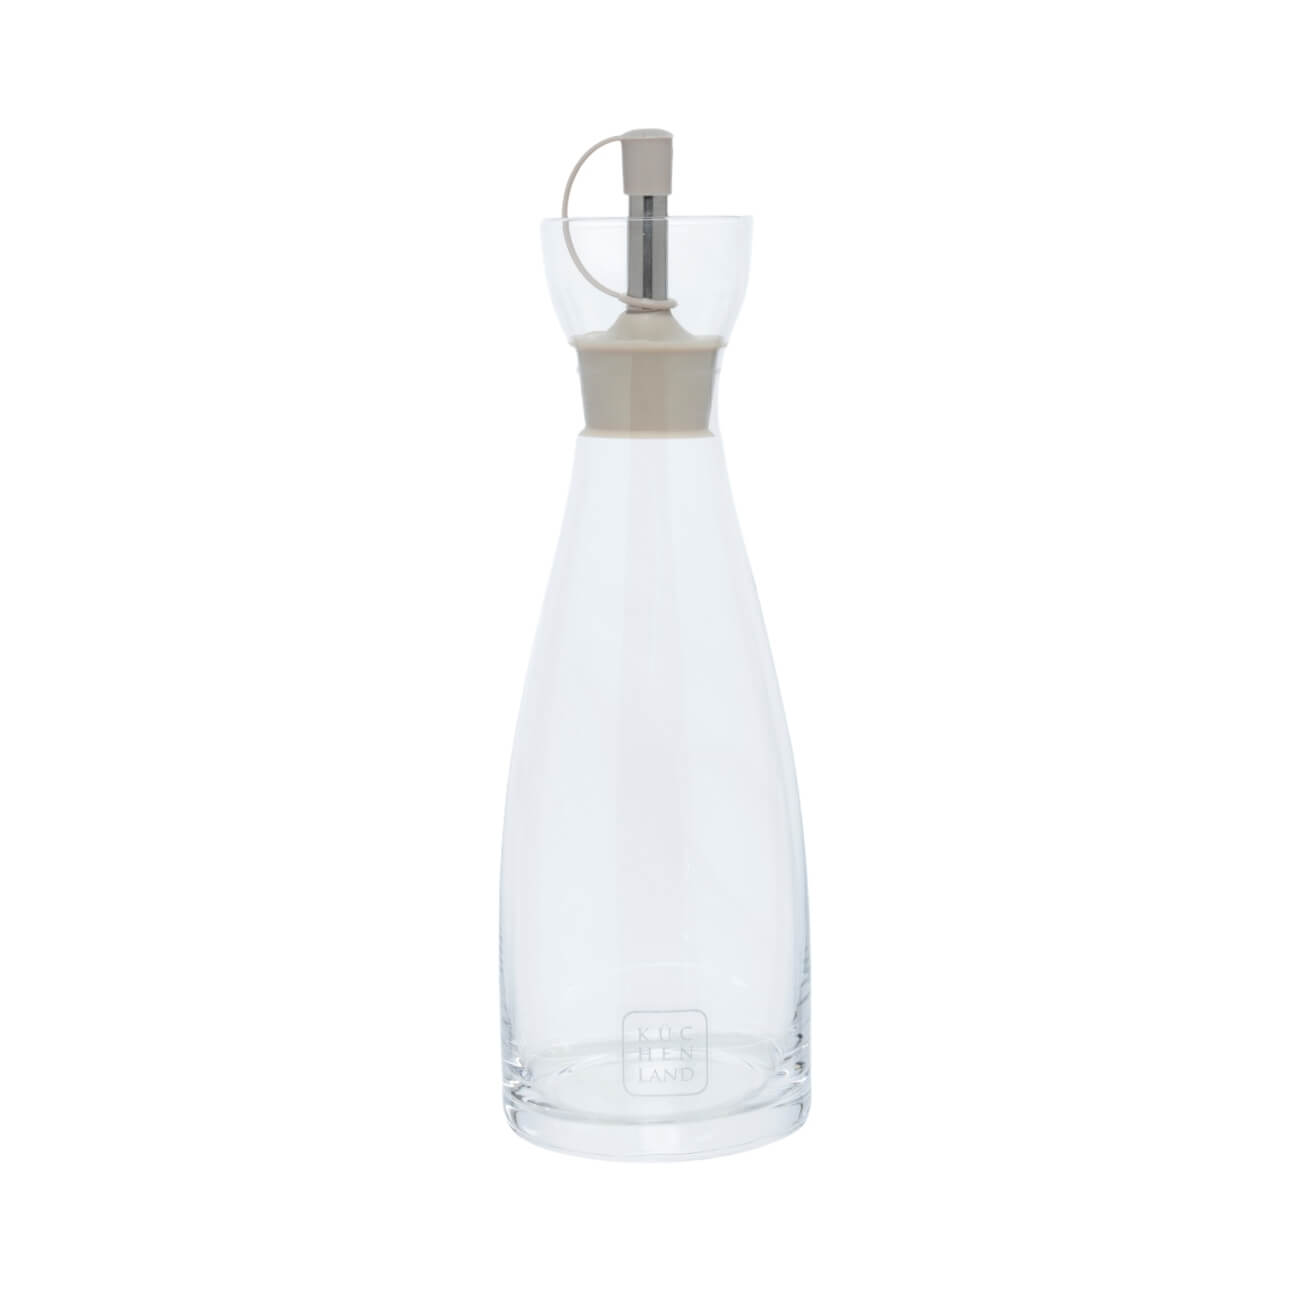 Бутылка для масла или уксуса, 350 мл, с дозаторам, стекло/силикон, бежевая, Soft Kitchen изображение № 1